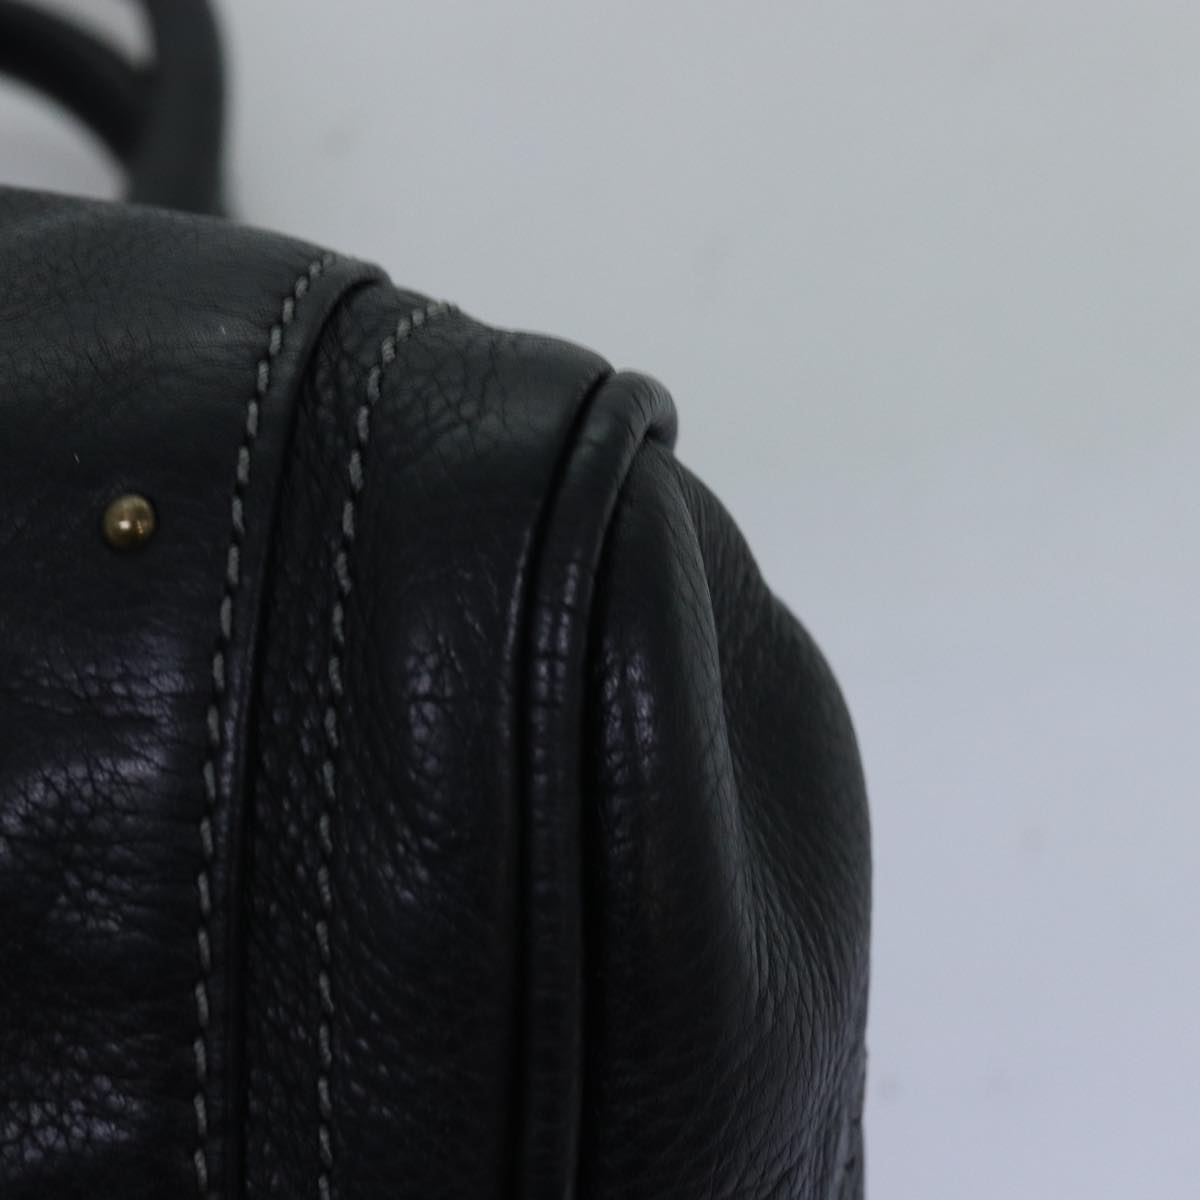 Chloe Paddington Hand Bag Leather Black Auth yk12511